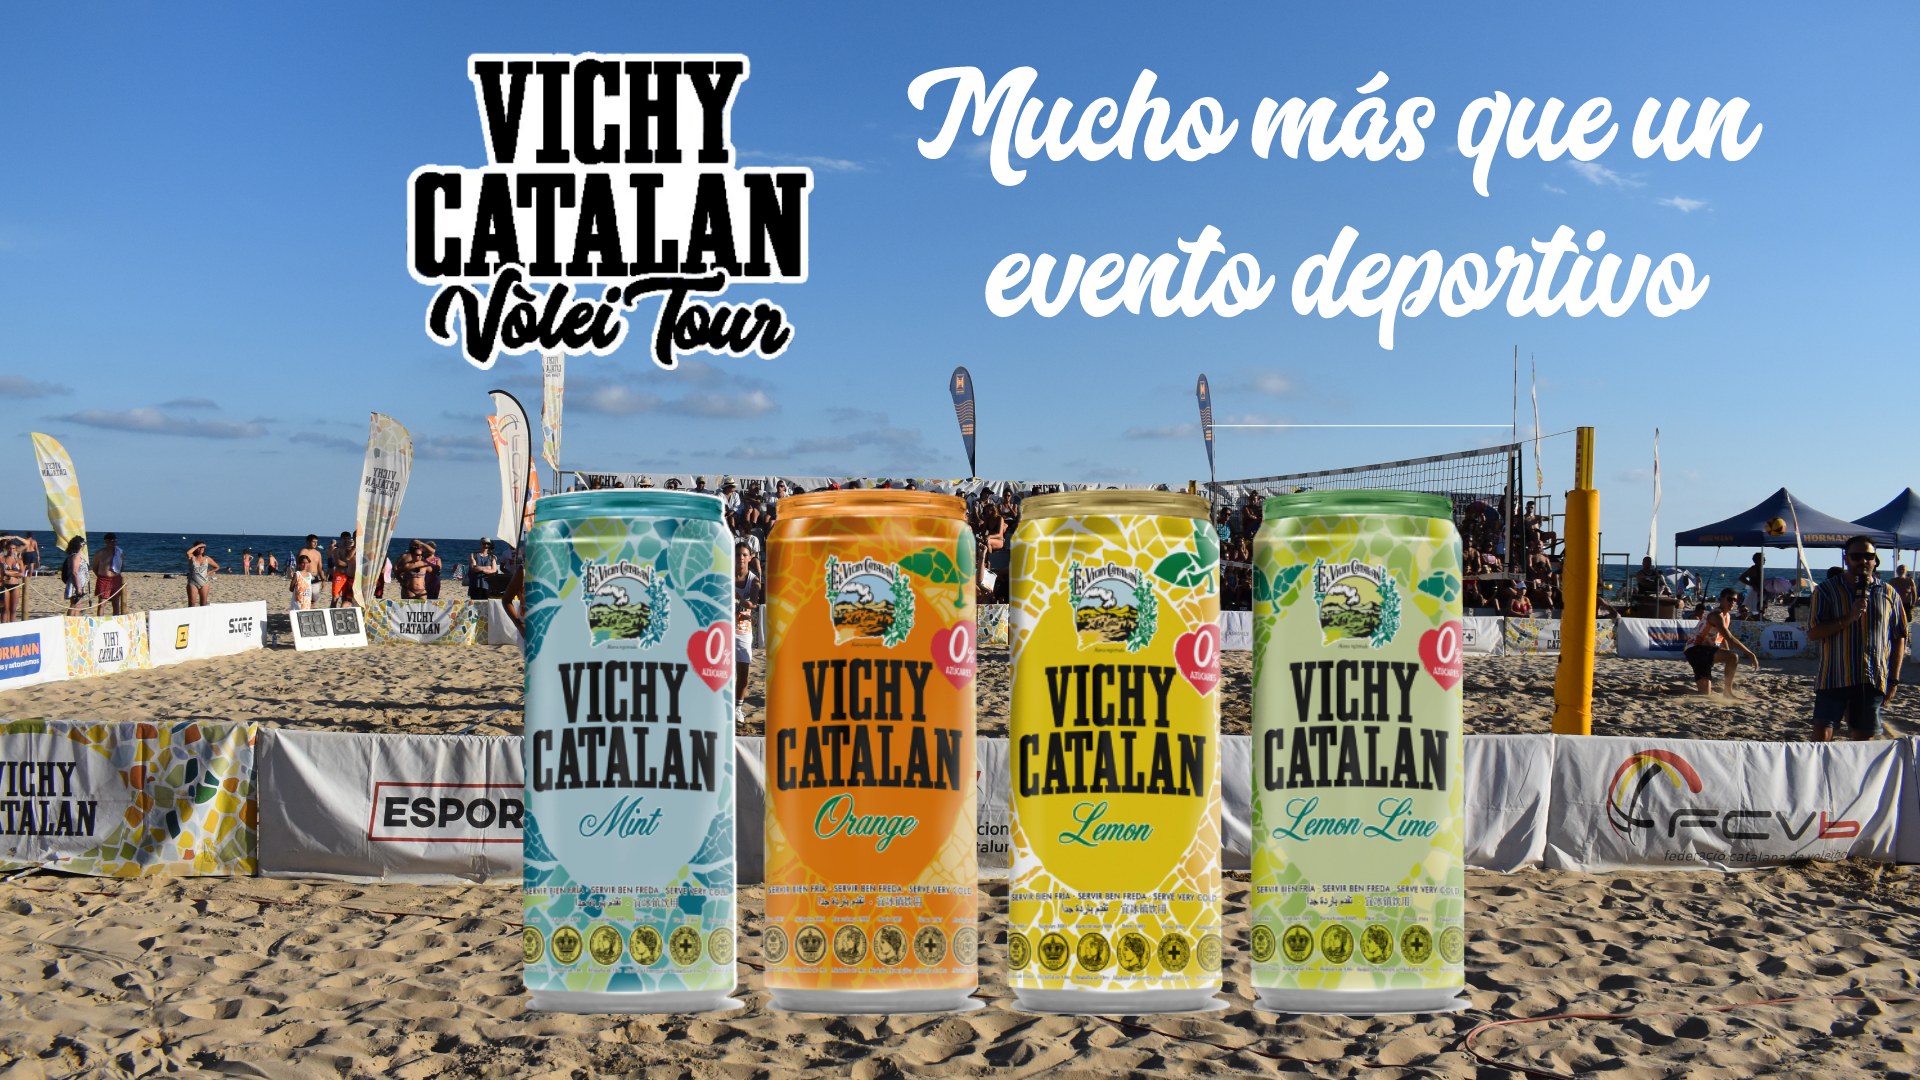 Vichy catalan voley tour sampling